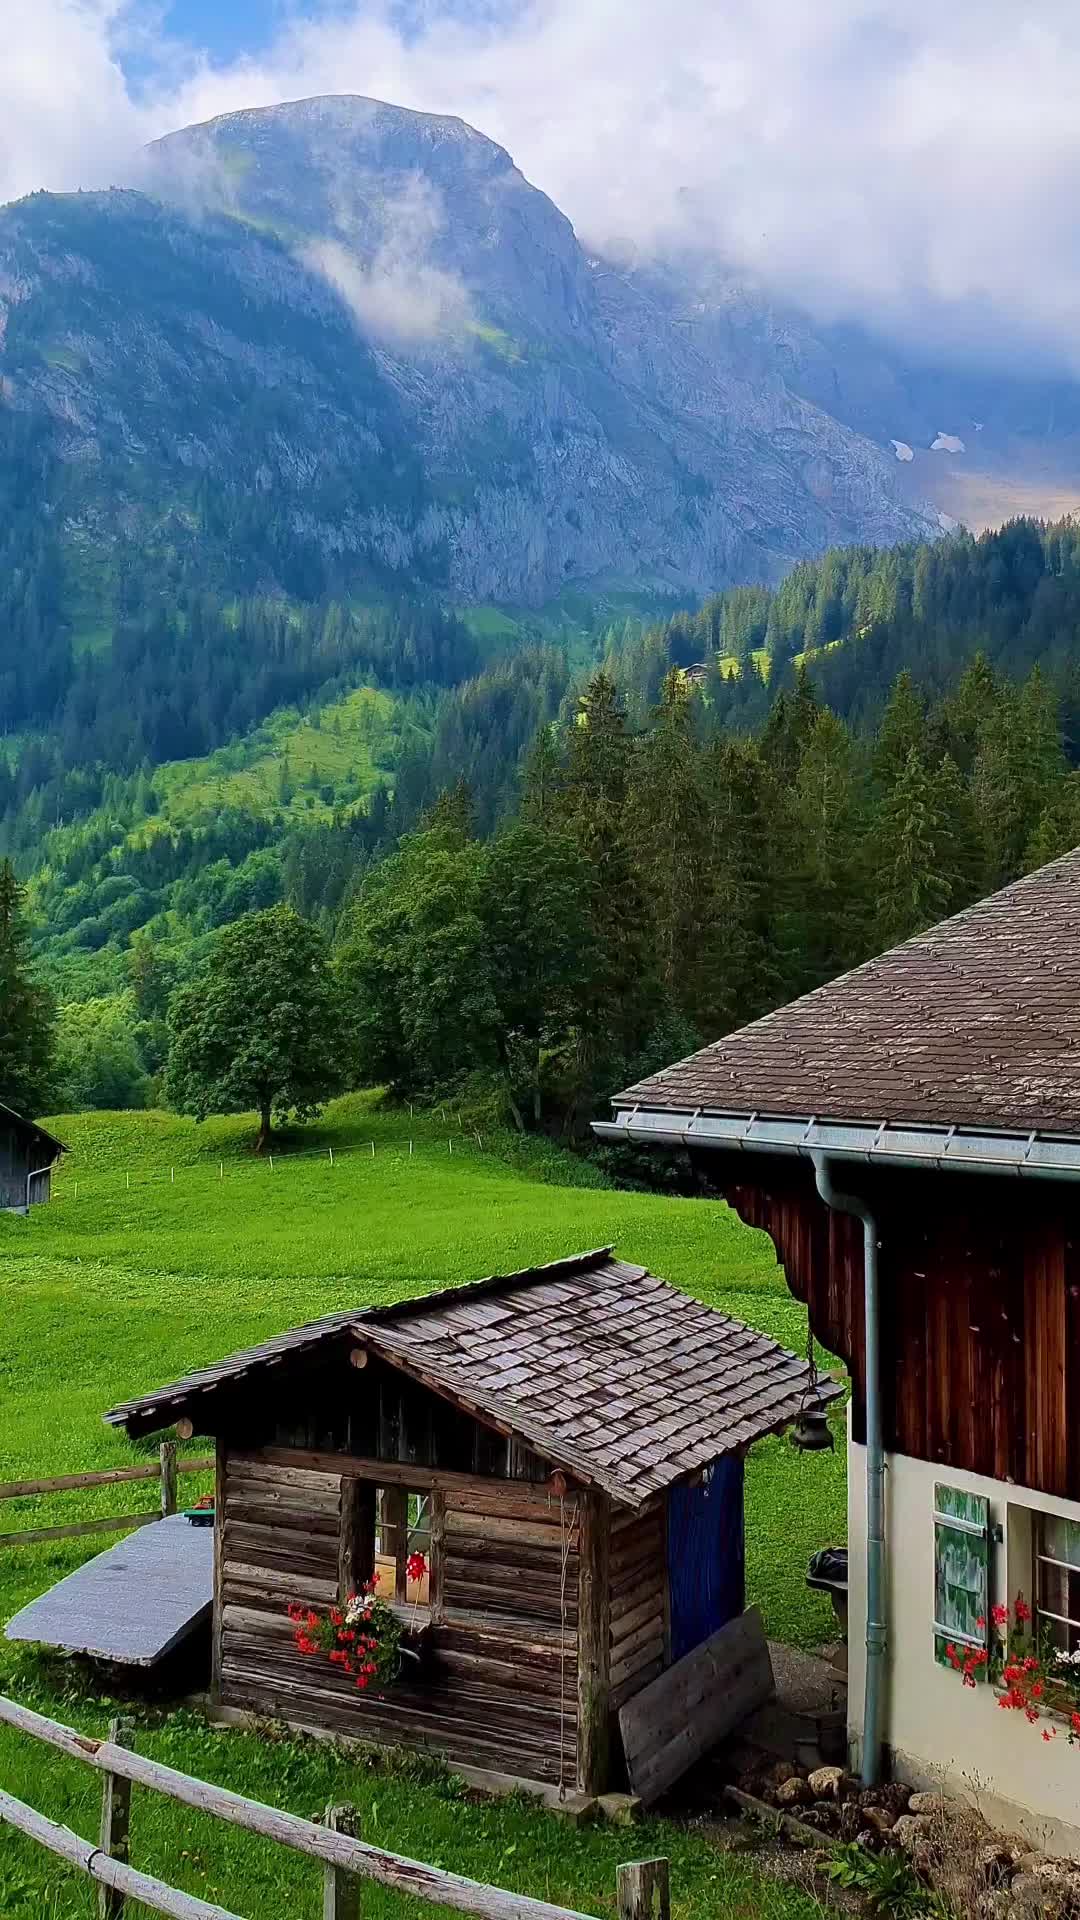 Discover Serenity at Lake Lauenen, Switzerland